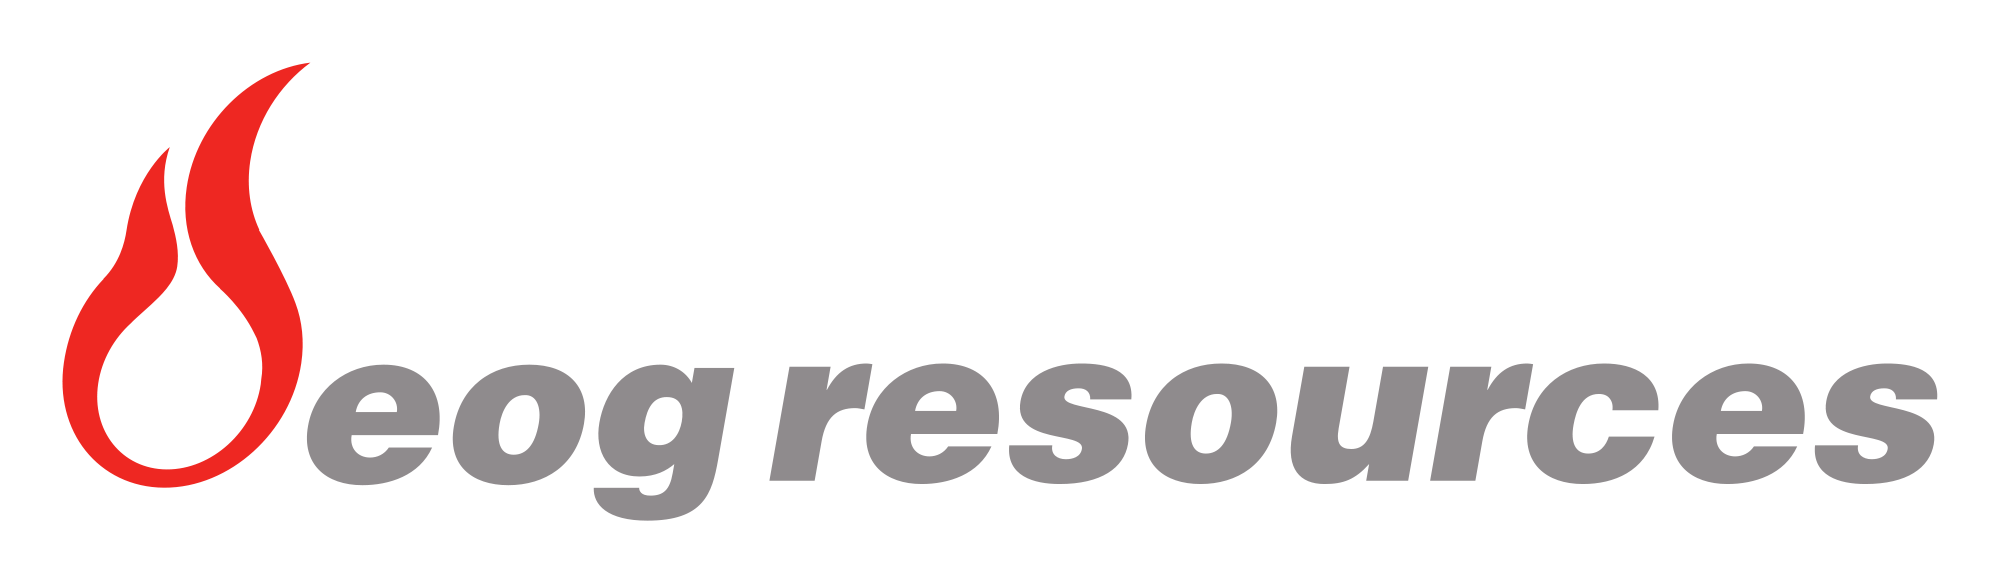 EOG Resources Logo image sizes: 2000 x 584 pixels. Format: png. Filesize:61 KB., Logo Eog Resources PNG - Free PNG